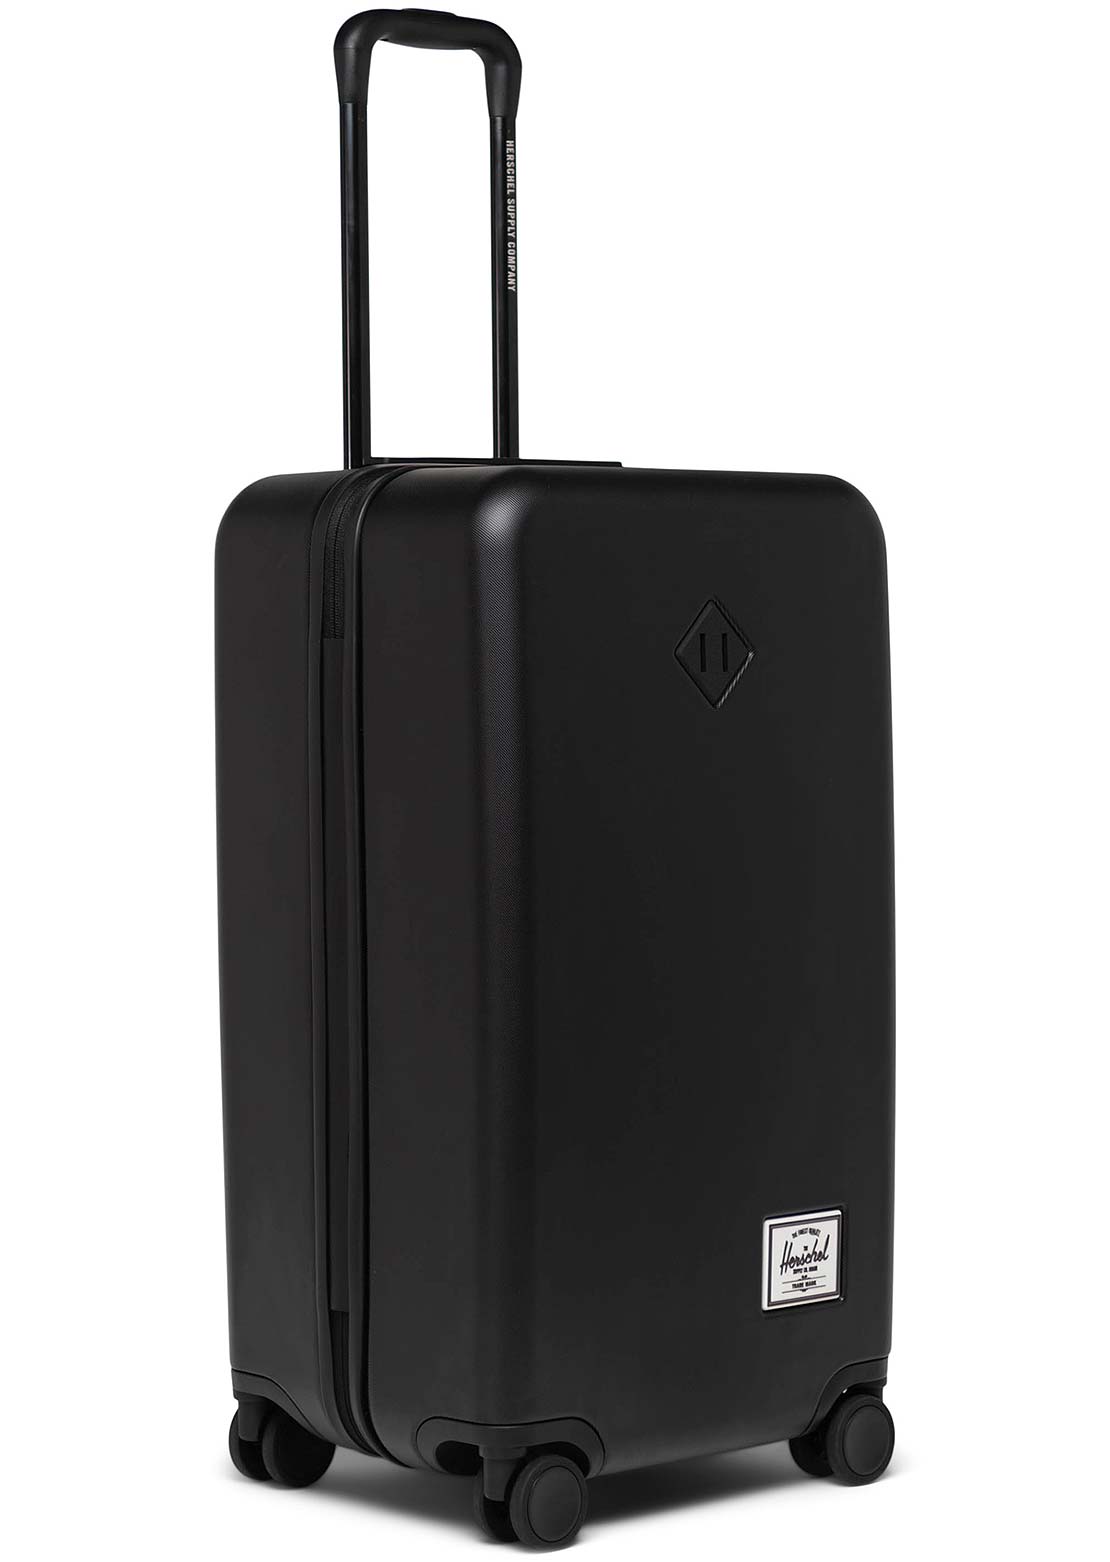 Herschel Heritage Hardshell Medium Luggage Black